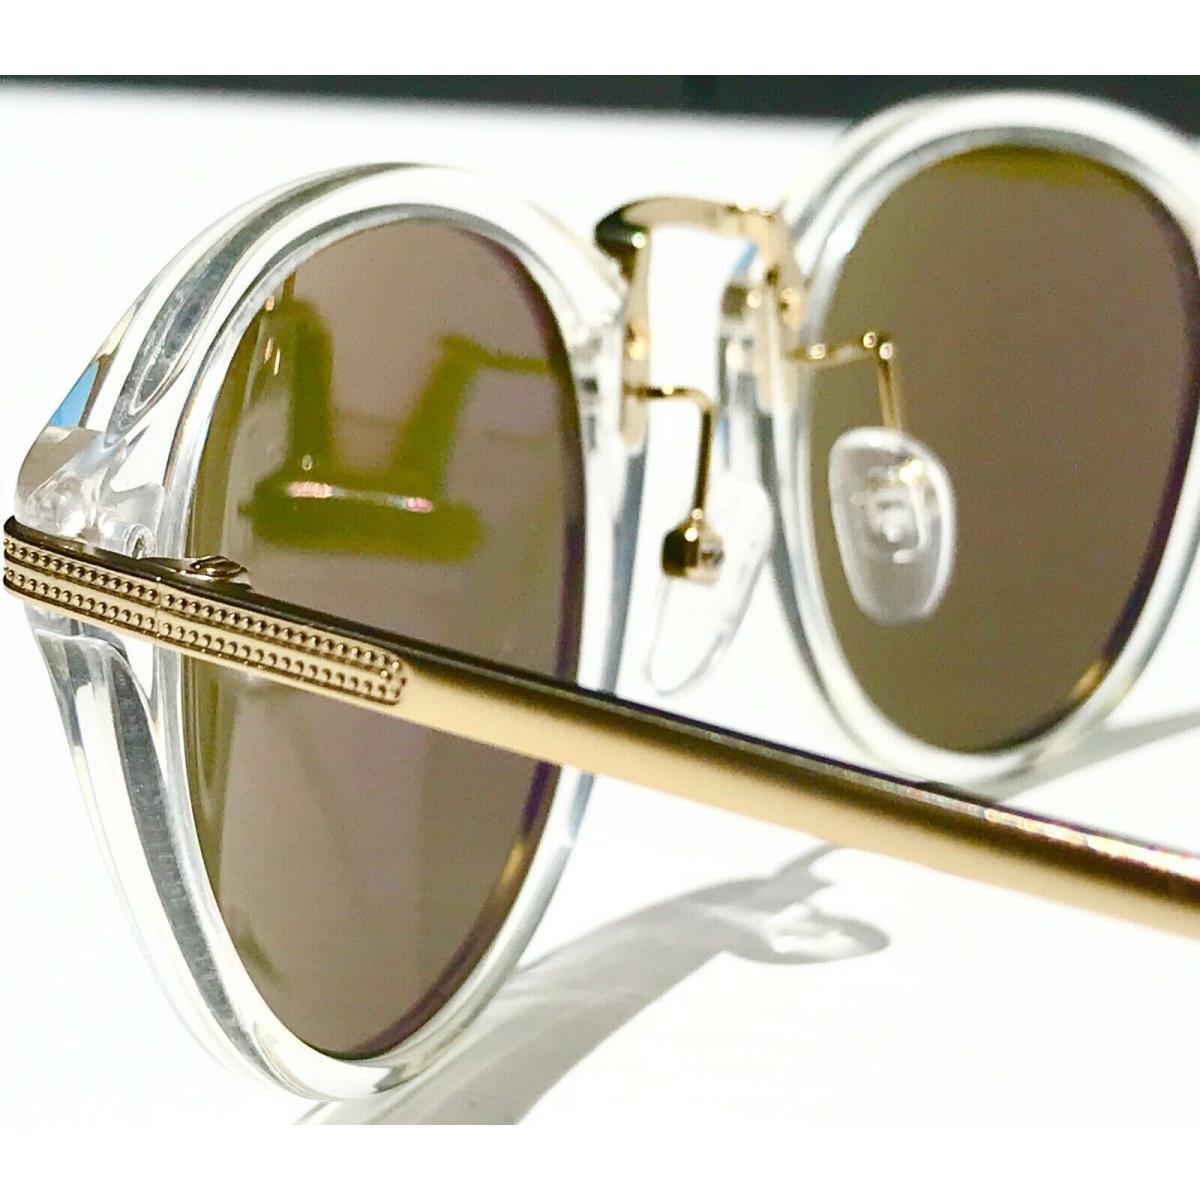 Revo sunglasses Quinn - Clear Frame, Blue Lens